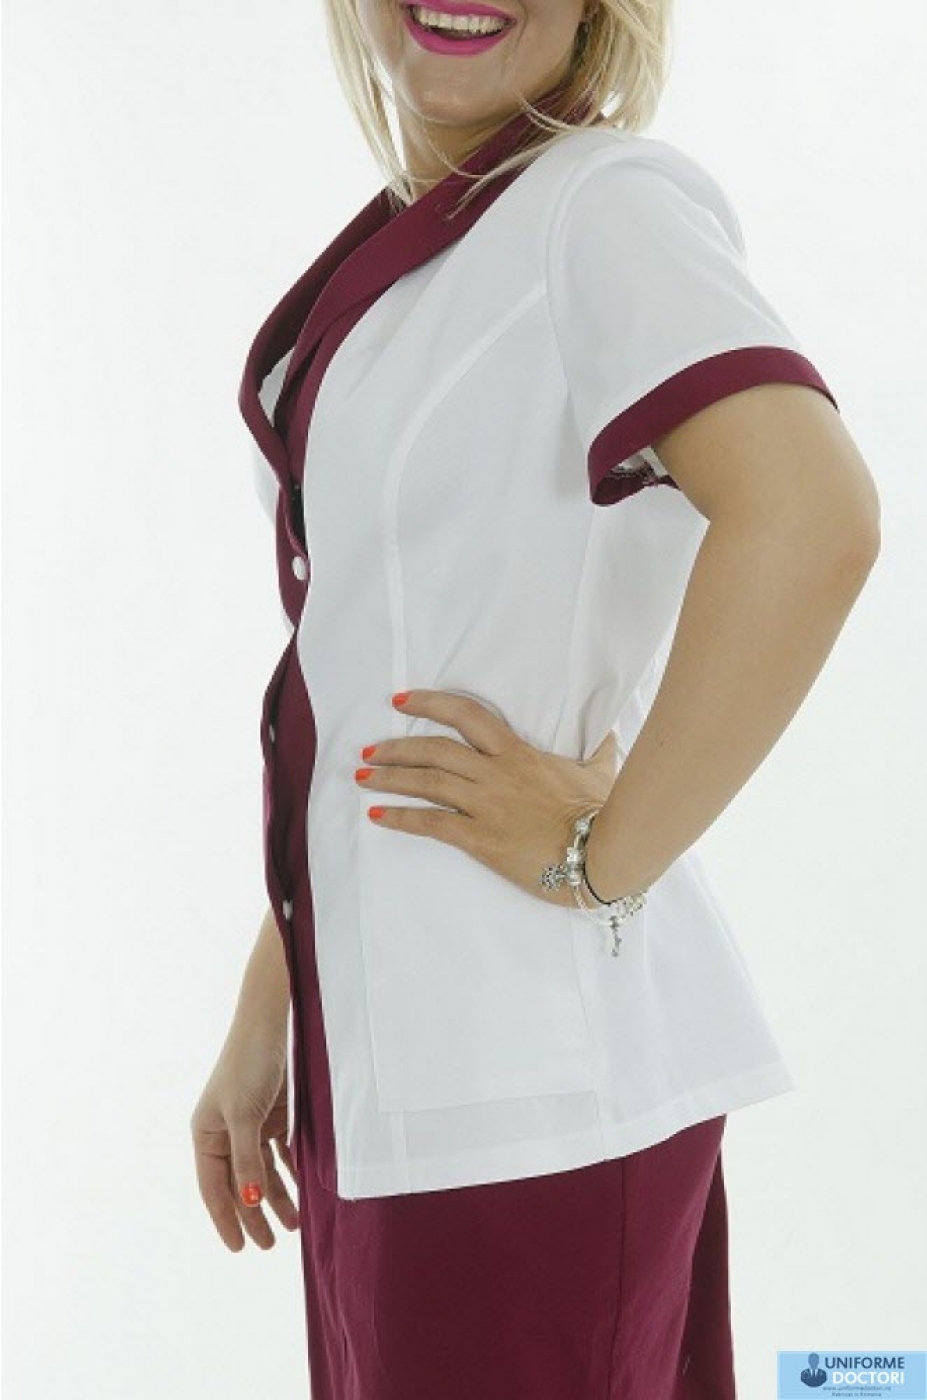 Uniforme medicale - Halat medical cu guler sal, maneca scurta, model bicolor